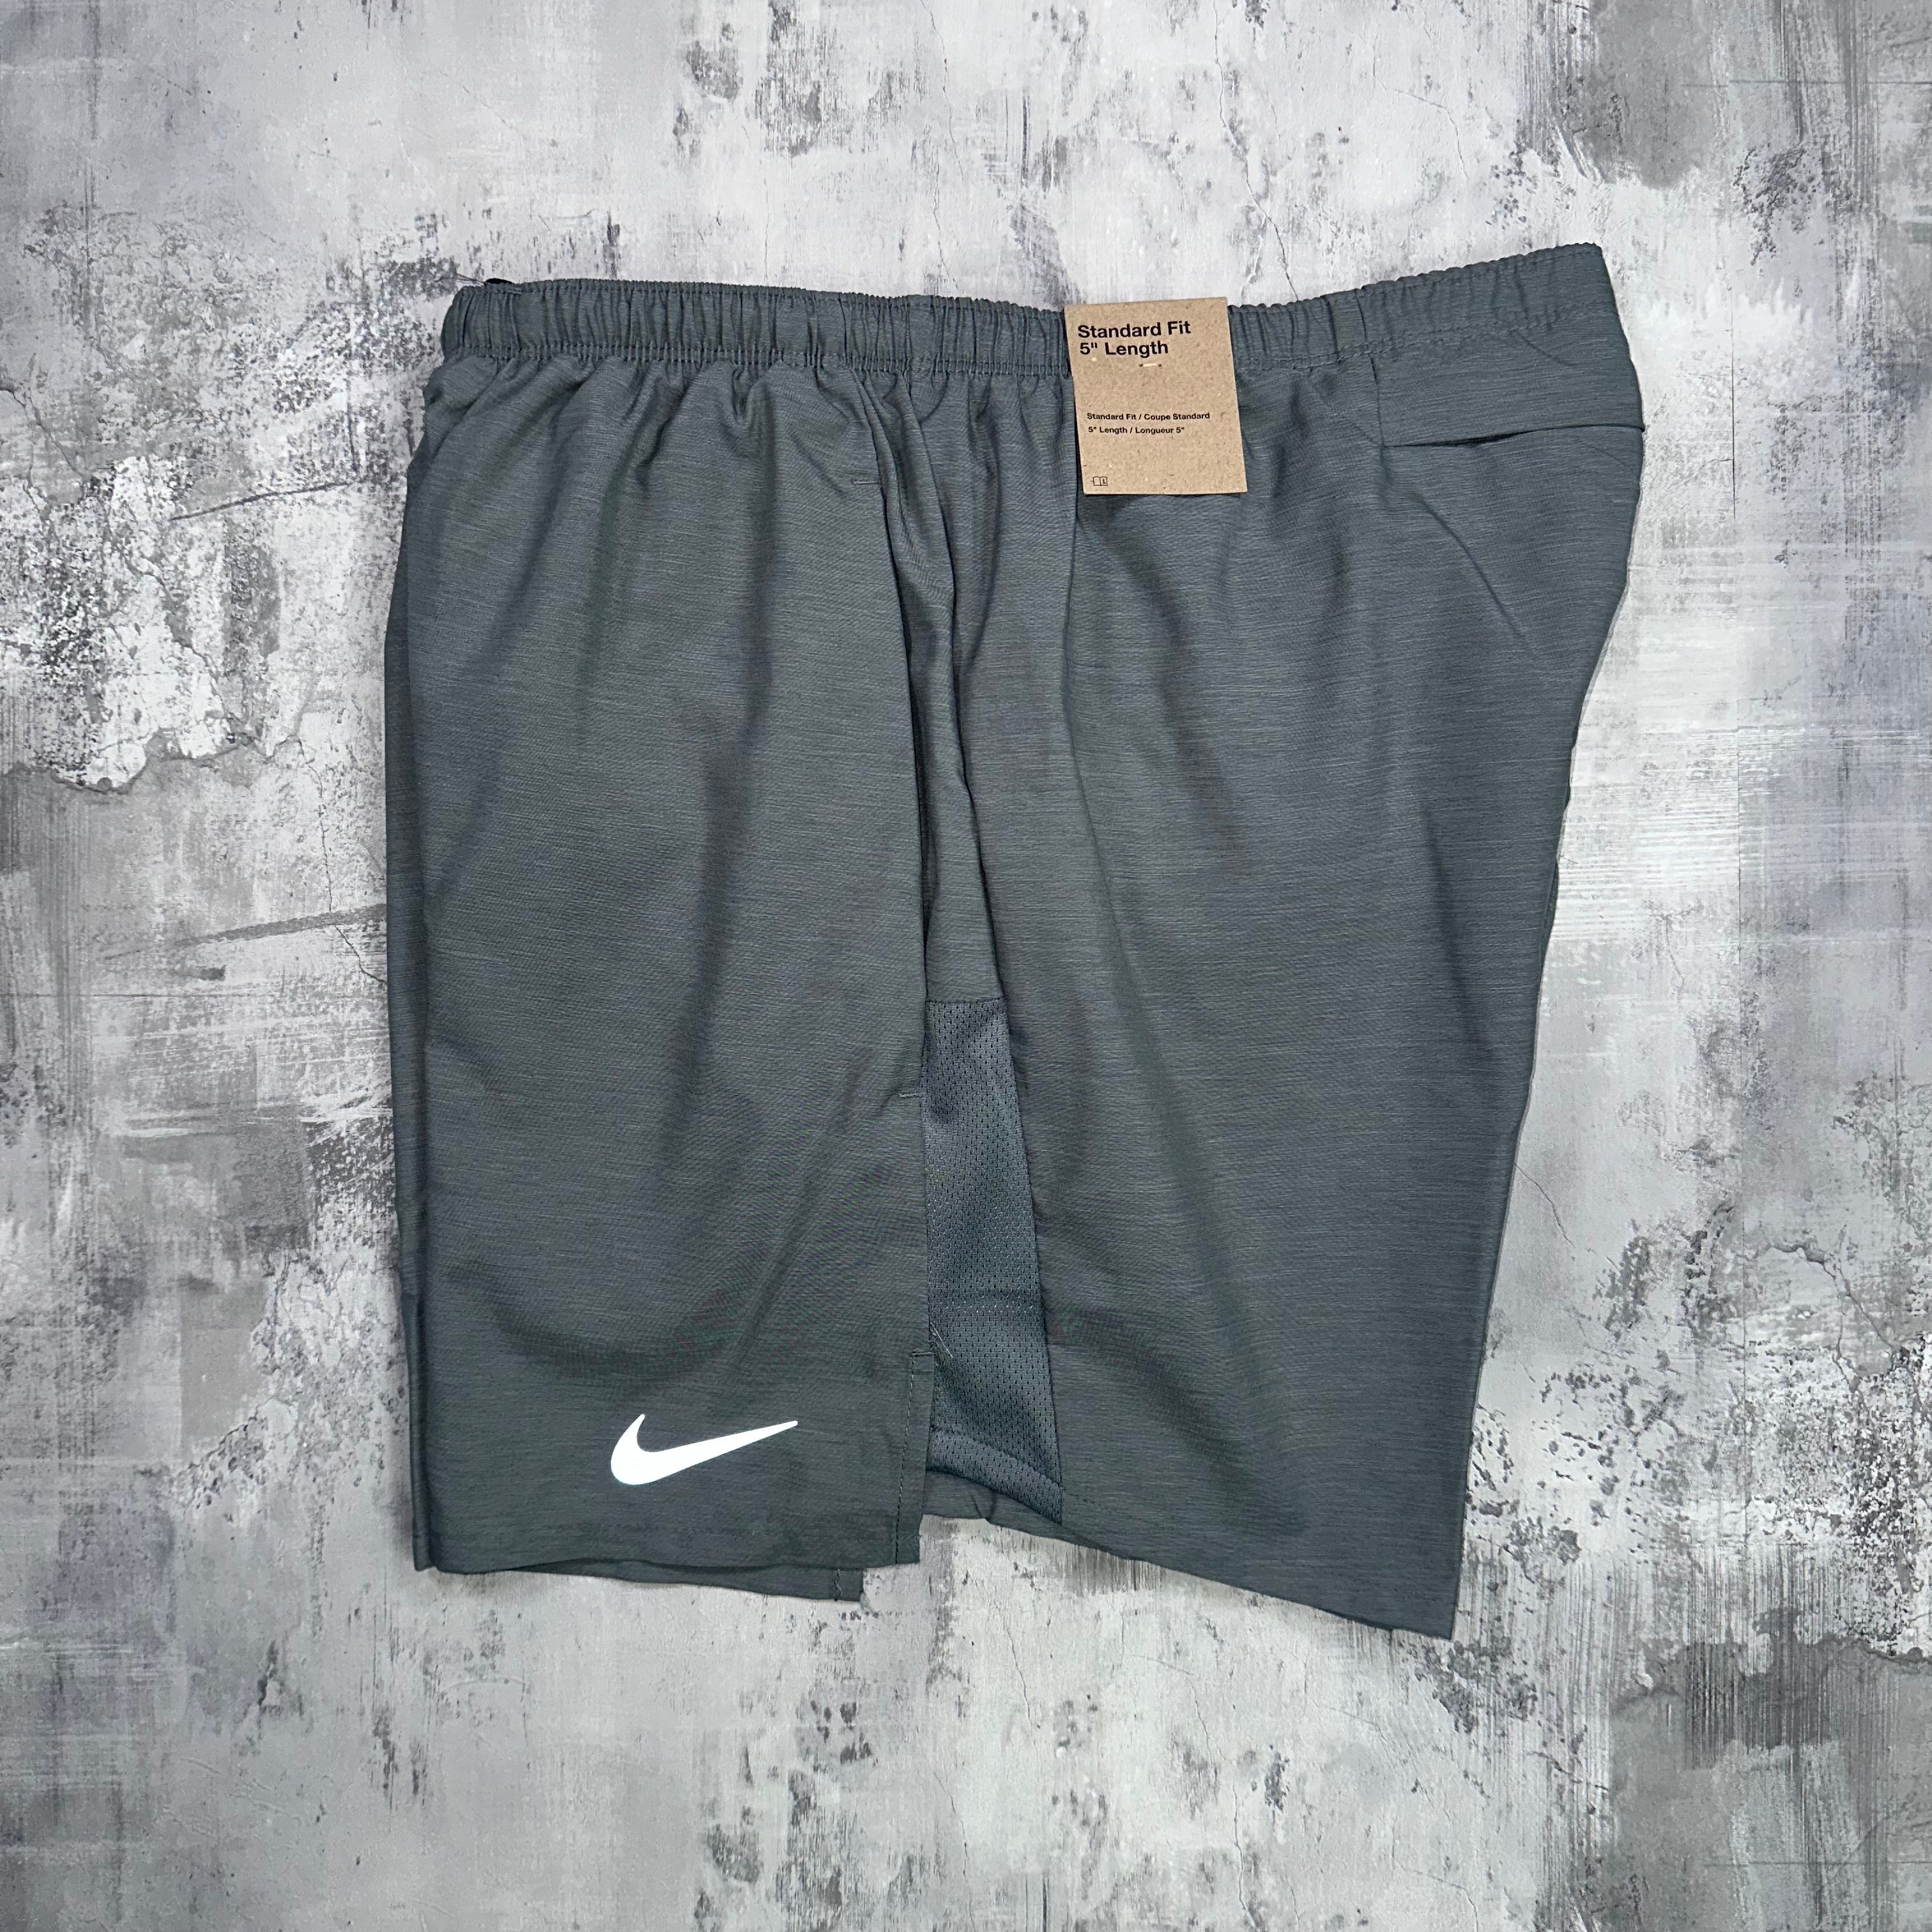 Nike Challenger shorts Grey